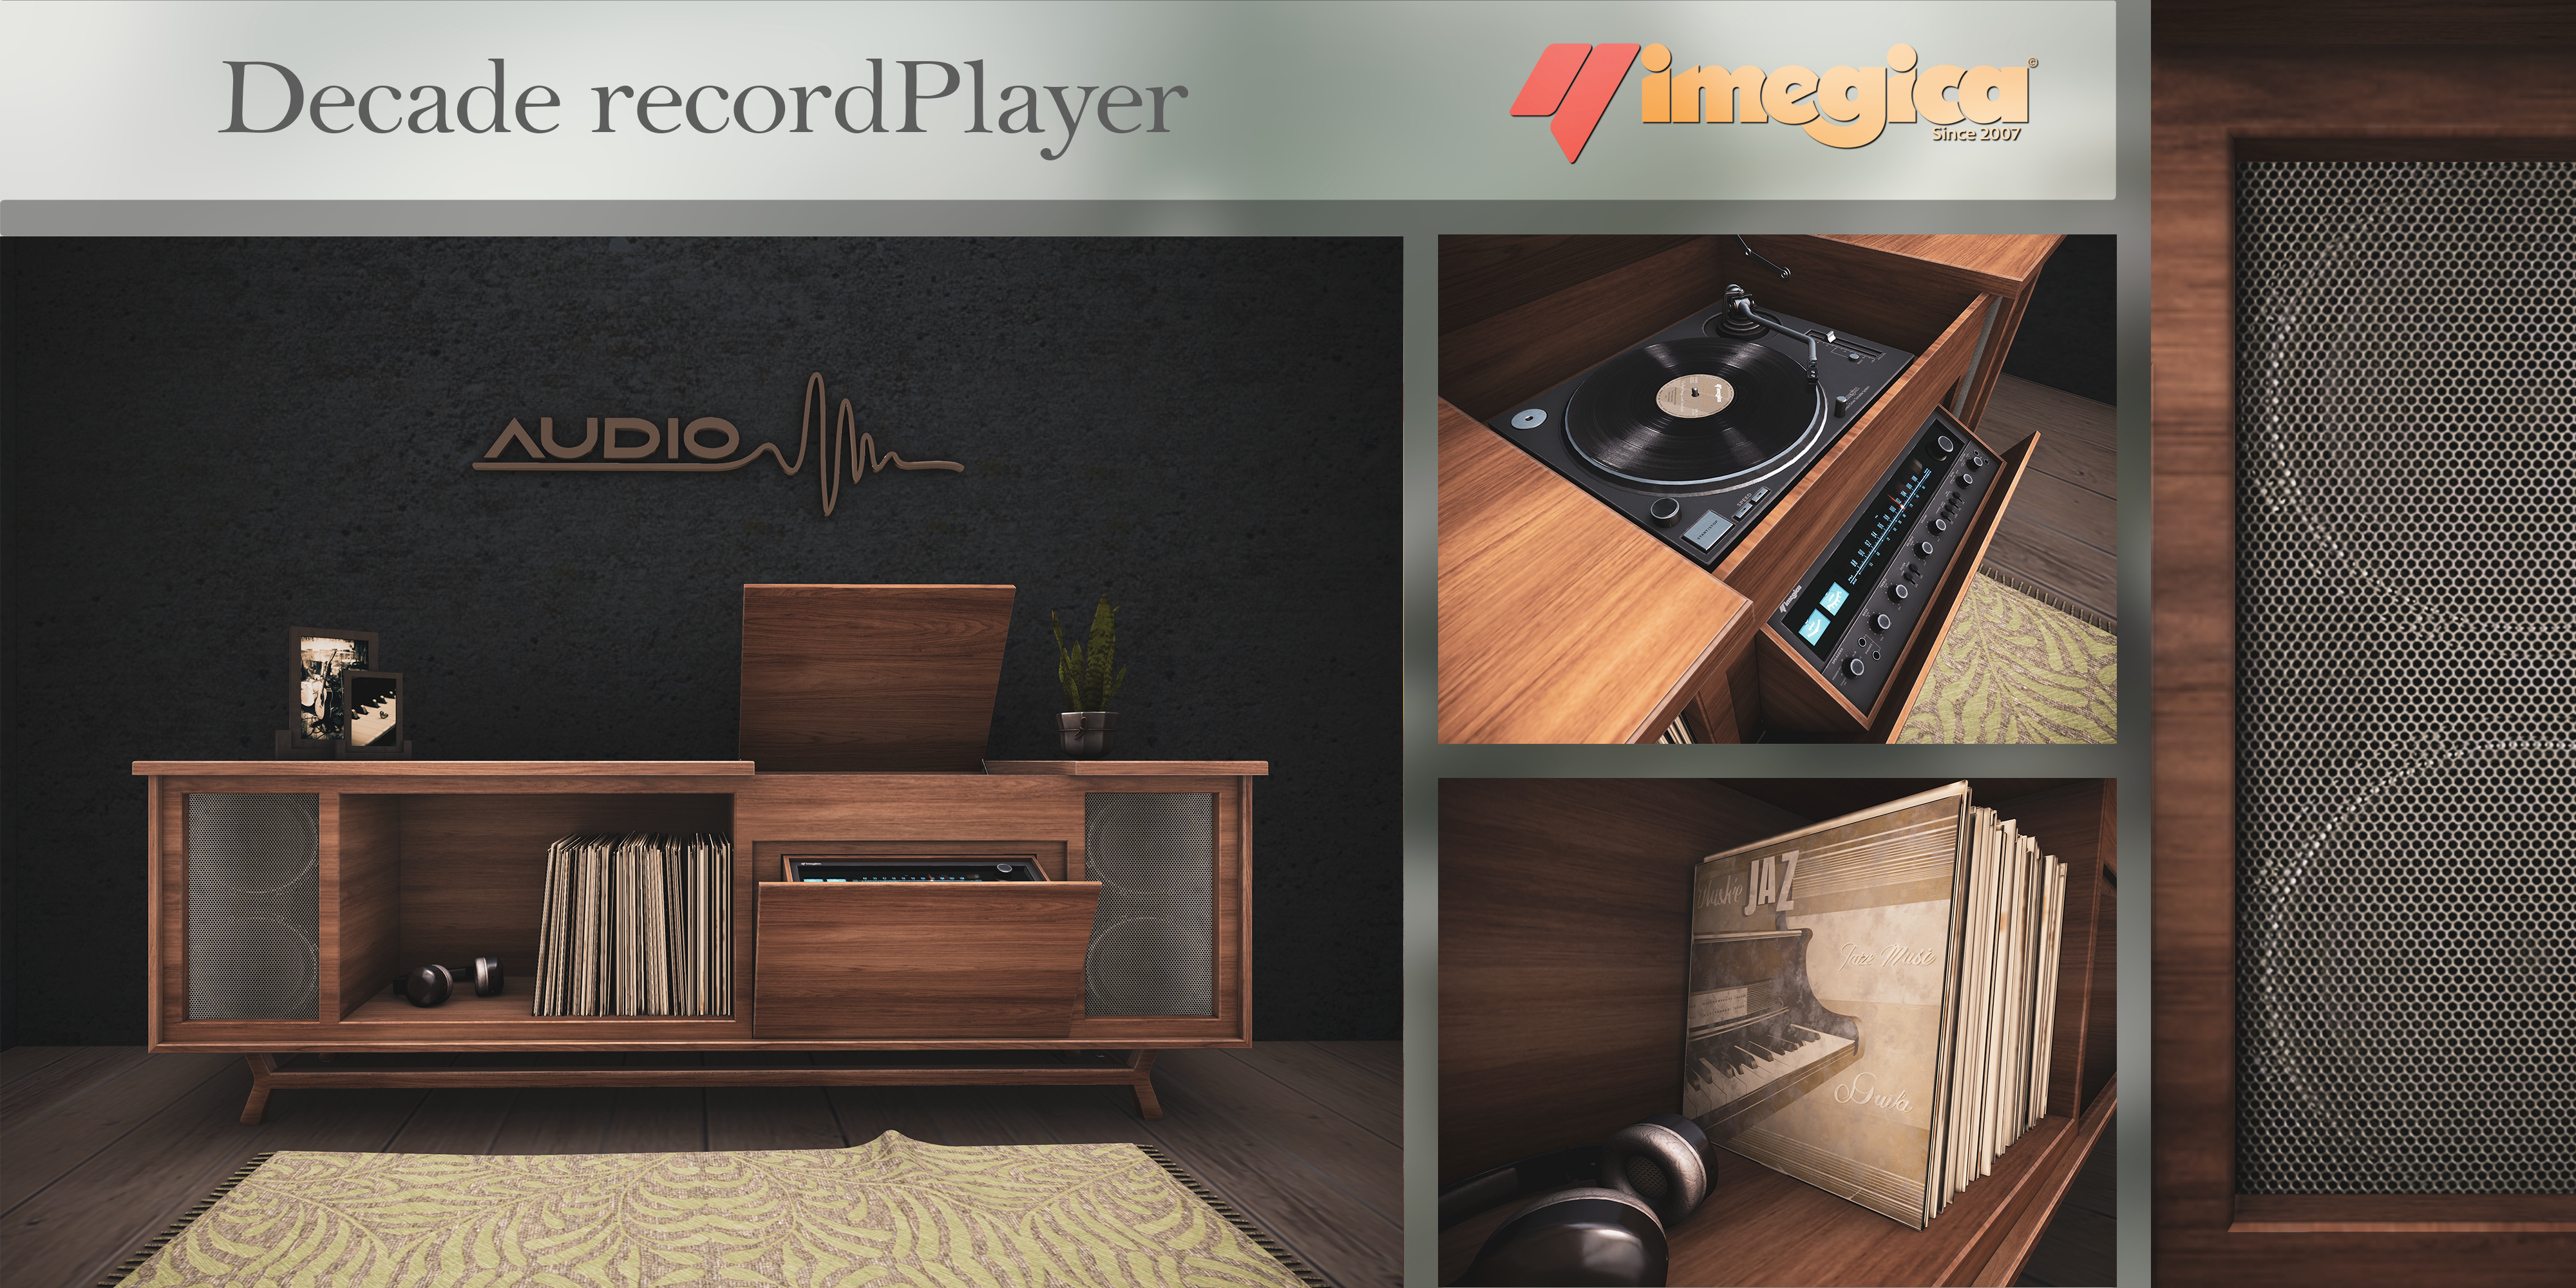 Imegica – Decade RecordPlayer